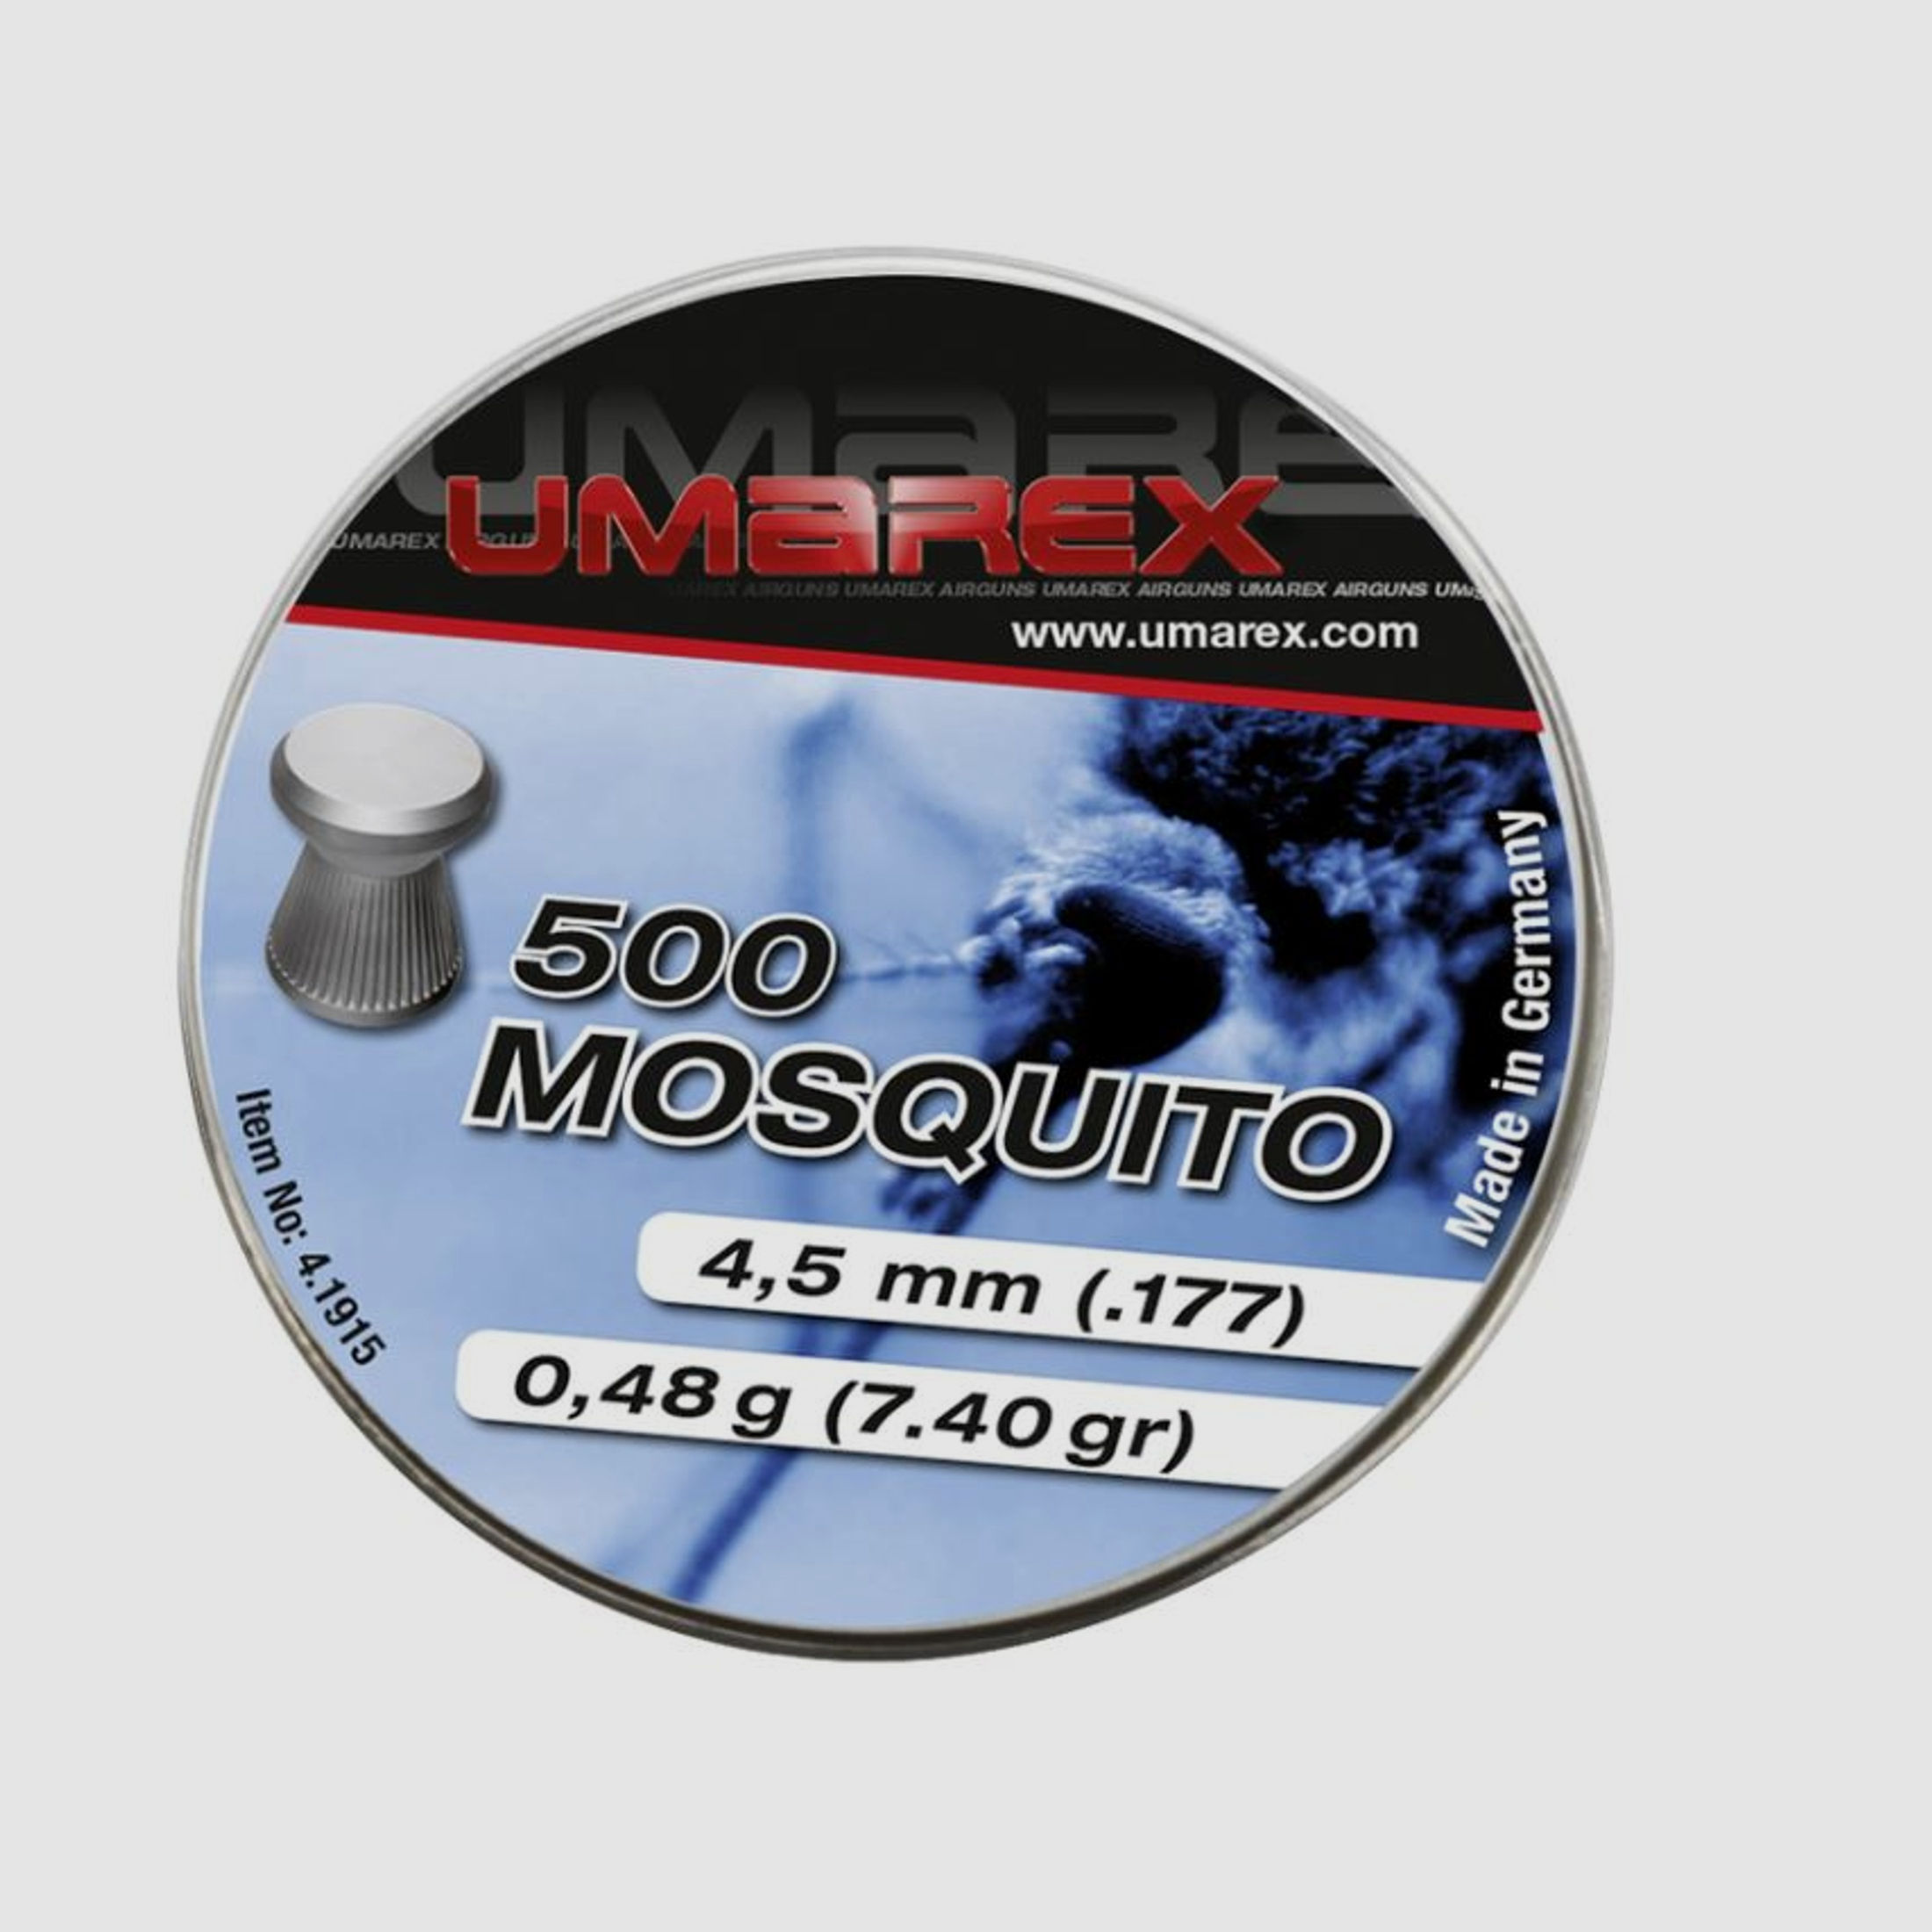 Umarex Mosquito- Flachkopf cal. 4,5mm (.177) 500 Stück